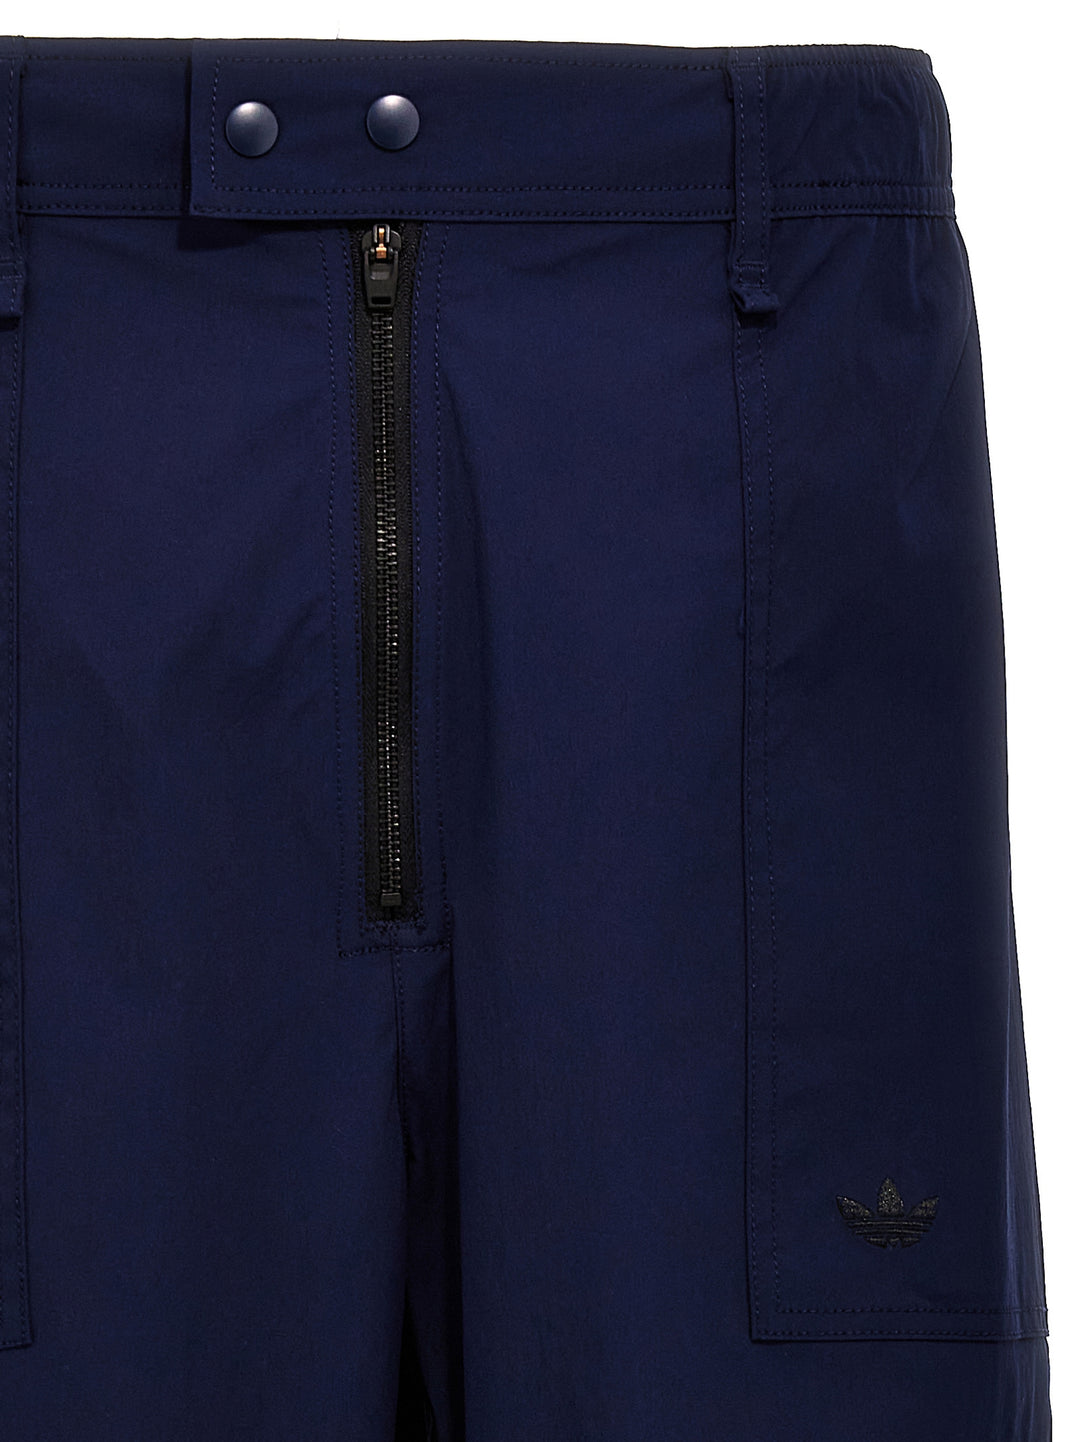 Adidas Originals X Wales Bonner Cargo Pantaloni Blu